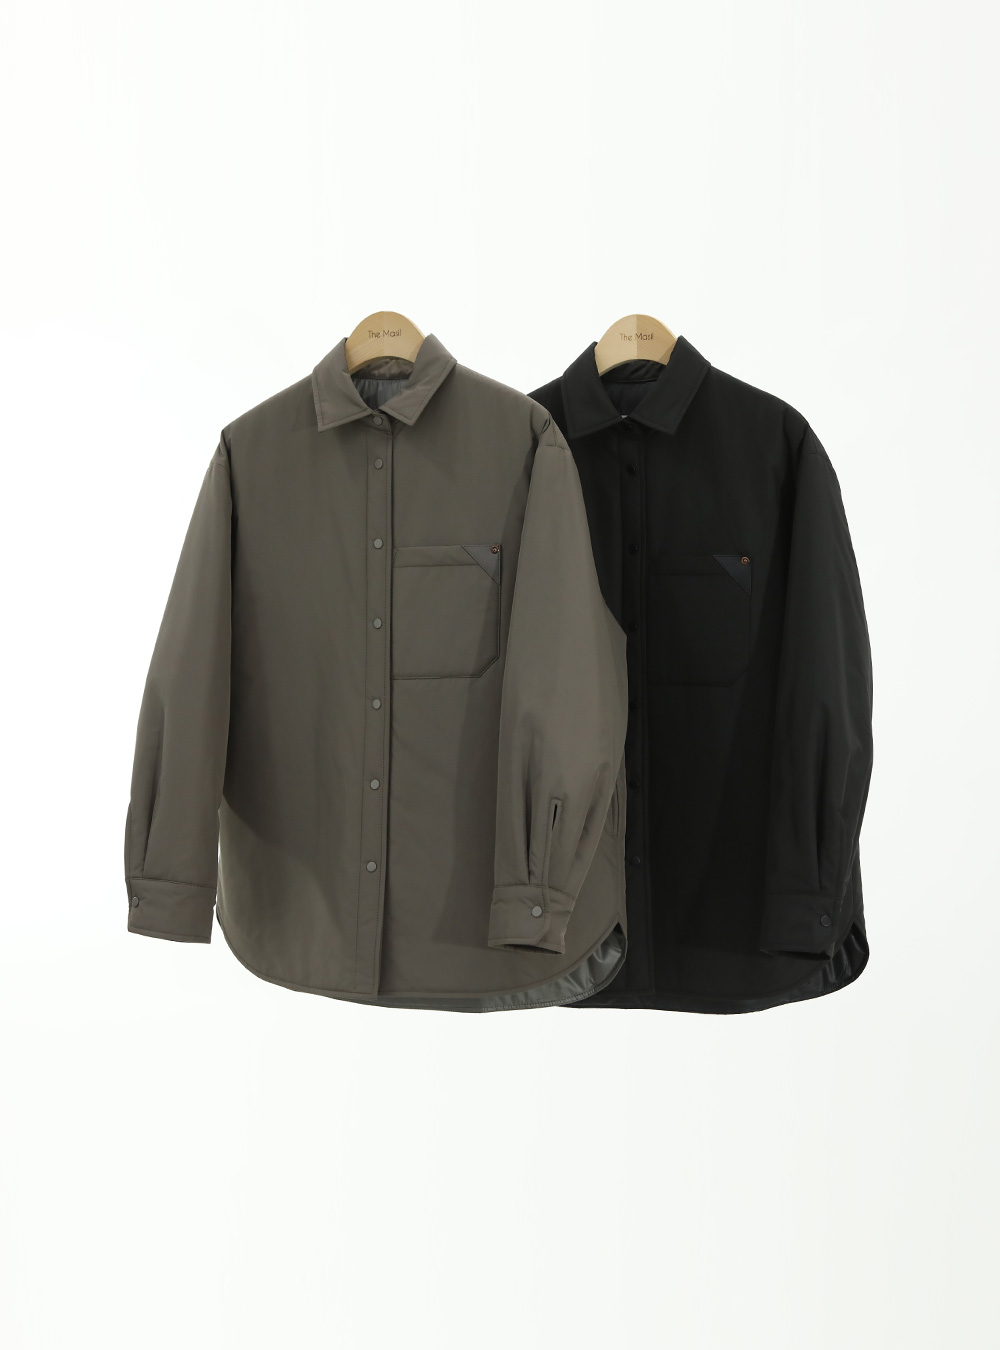 TS 311630 패딩 재킷 겸용 롱 셔츠